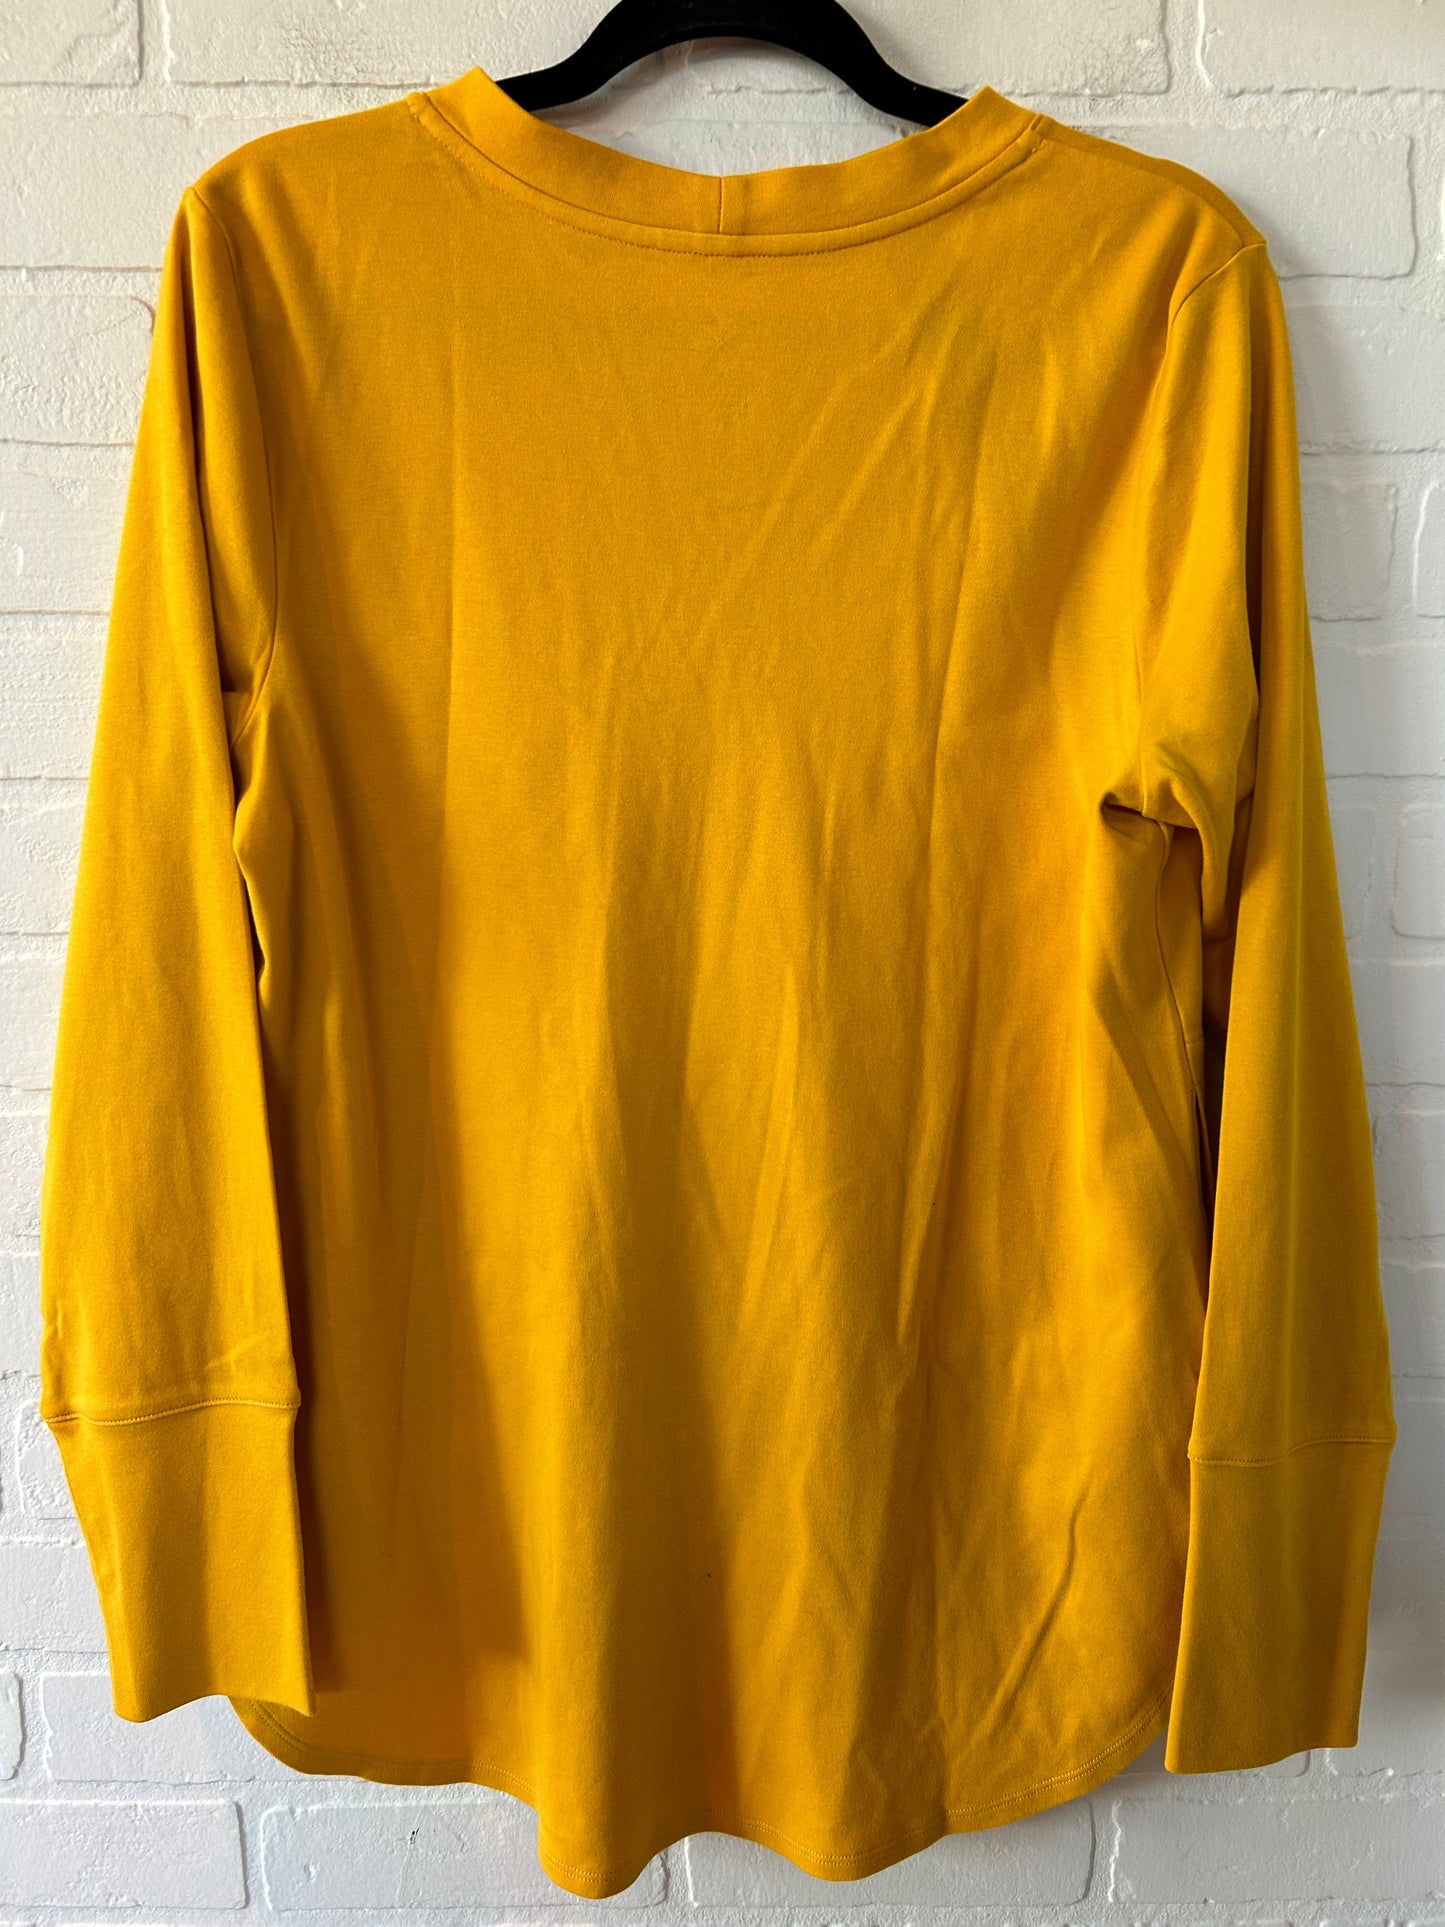 Yellow Top Long Sleeve Isaac Mizrahi Live Qvc, Size M